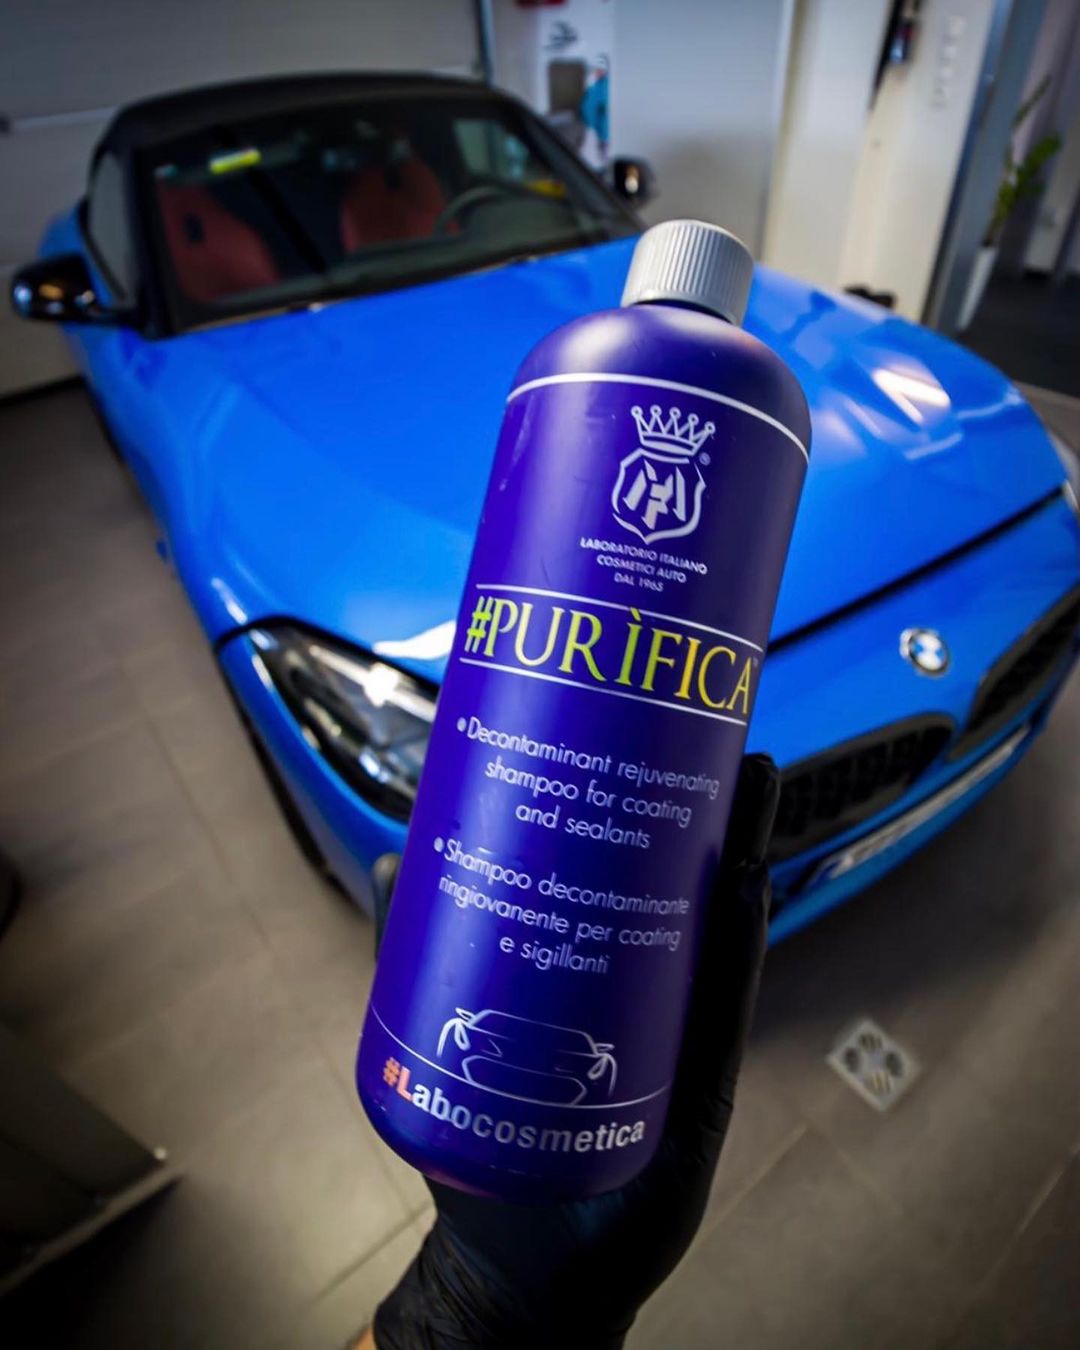 Labocosmetica Purifica Shampoo. Blue bottle with see through cap. Labocosmetica Cork Ireland. BMW Z4